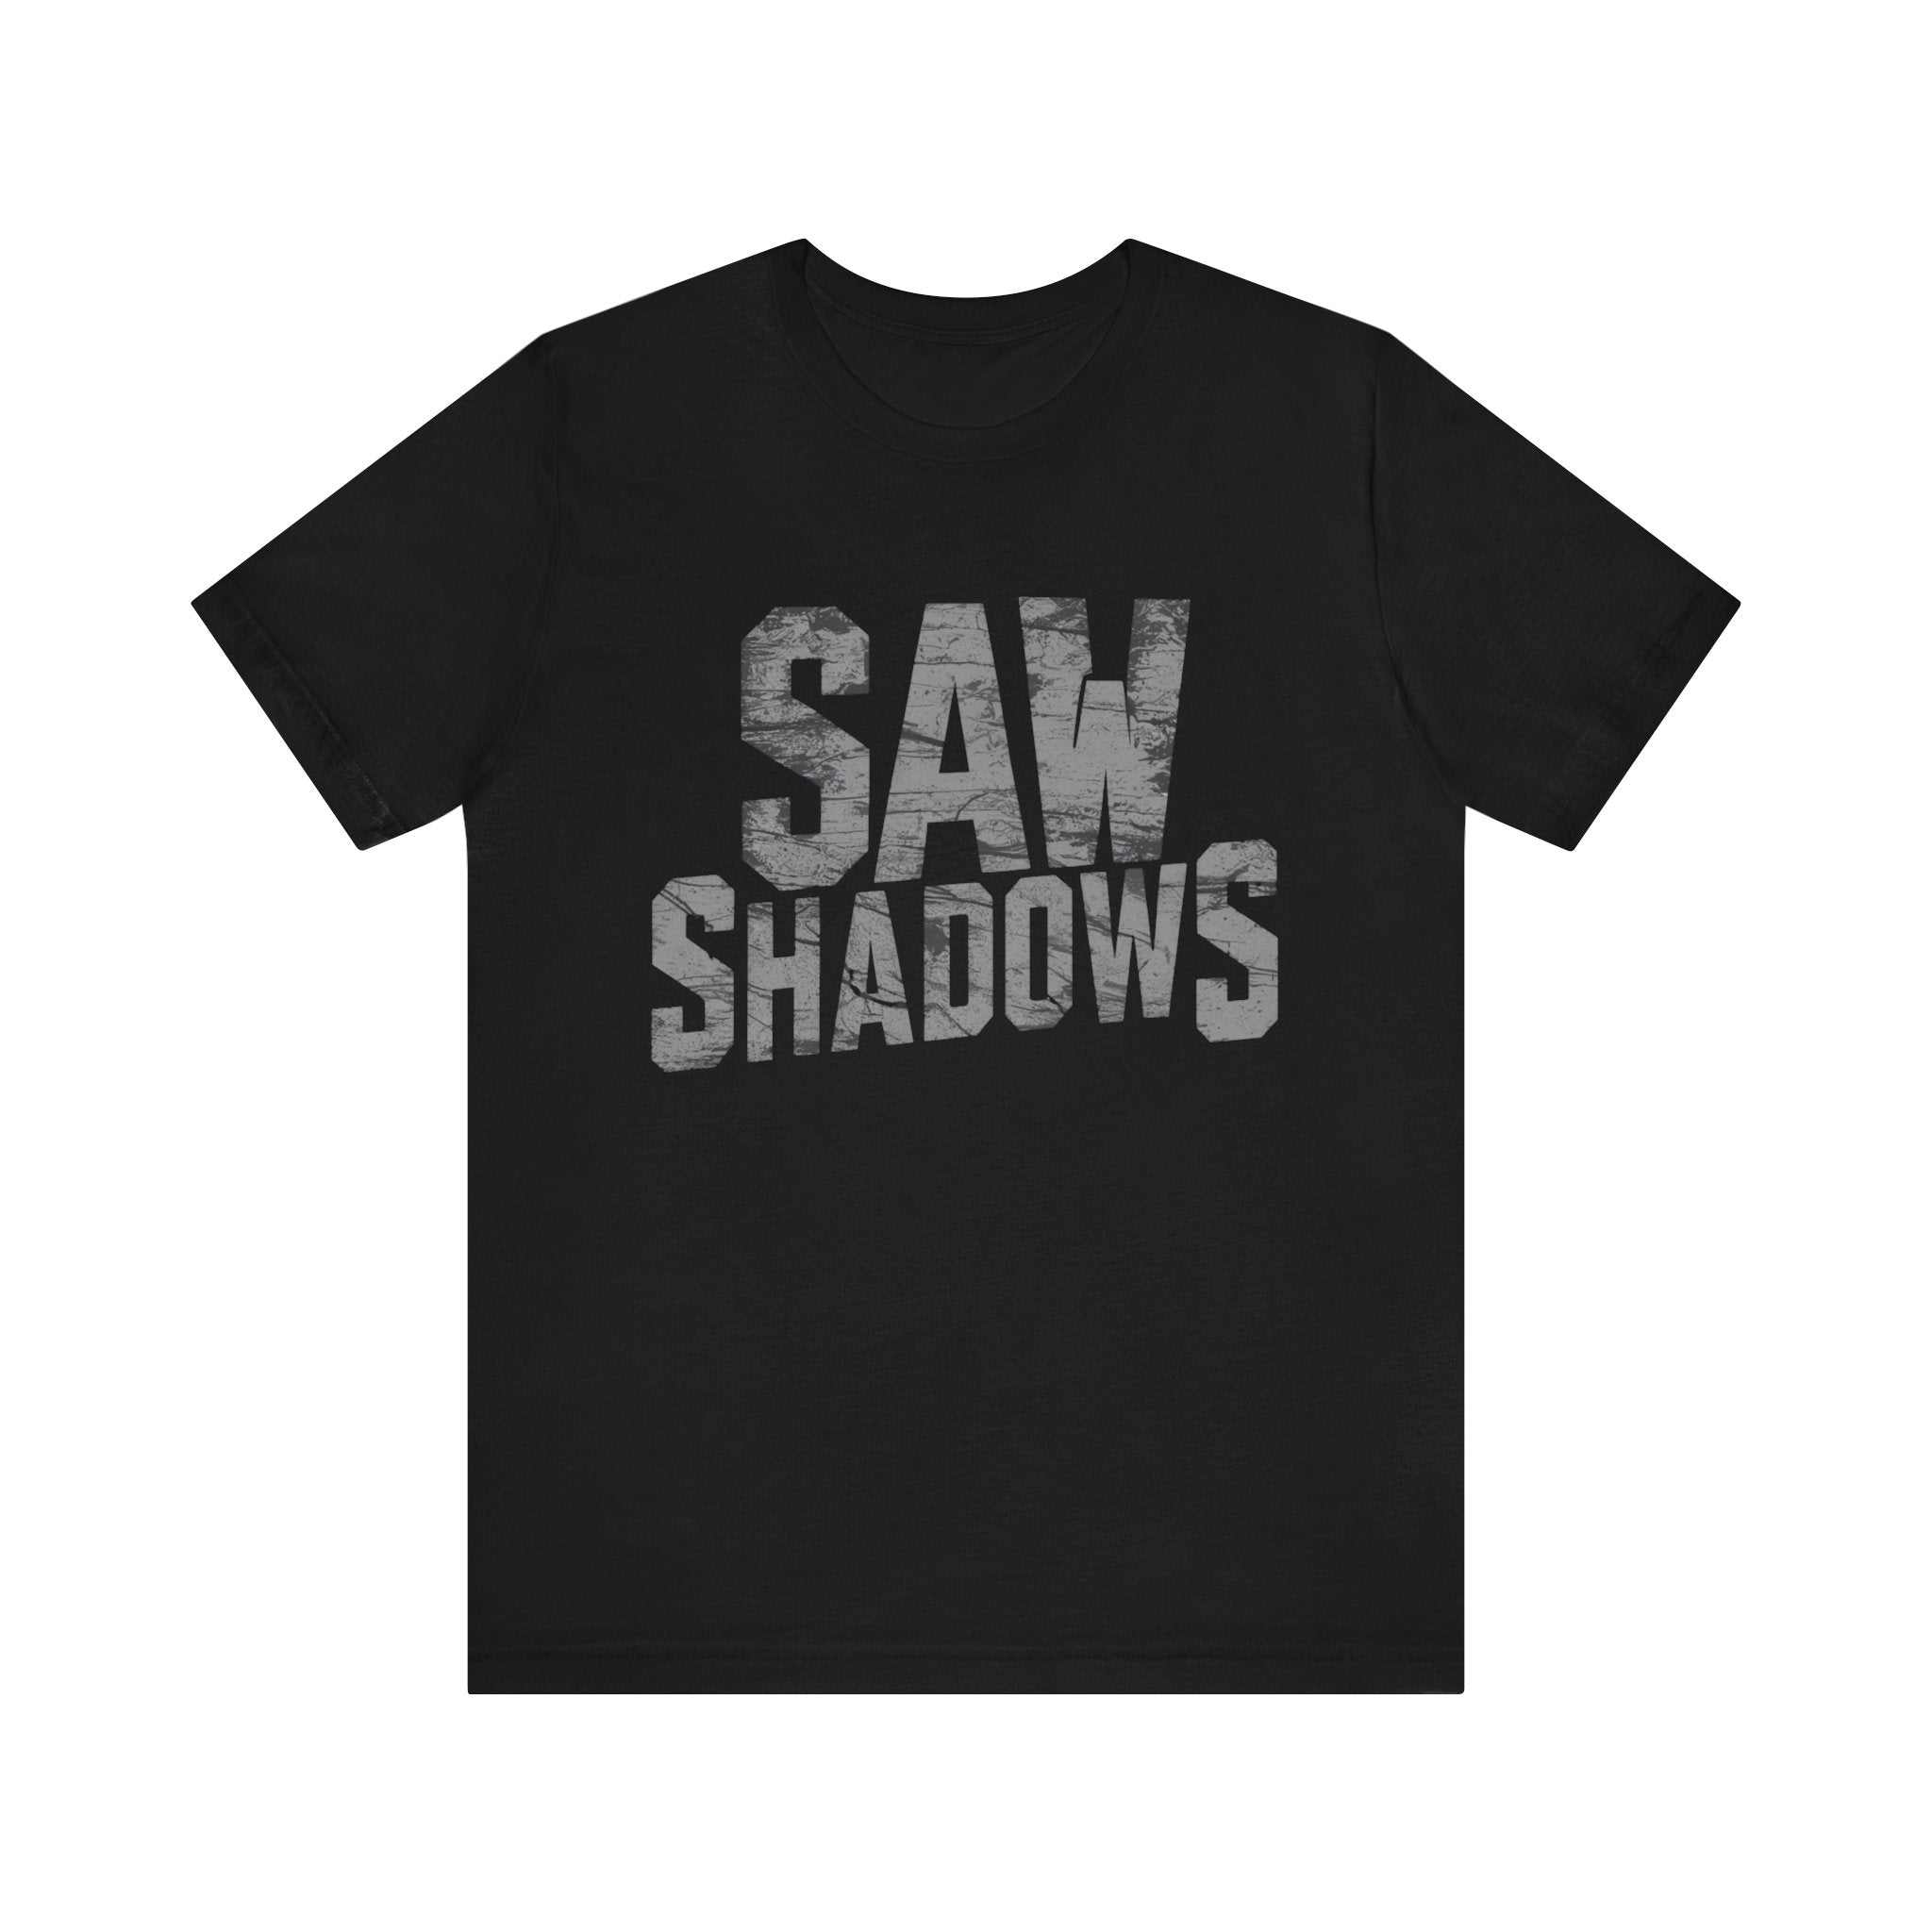 Saw Shadows Band Plain Graphic Shirt